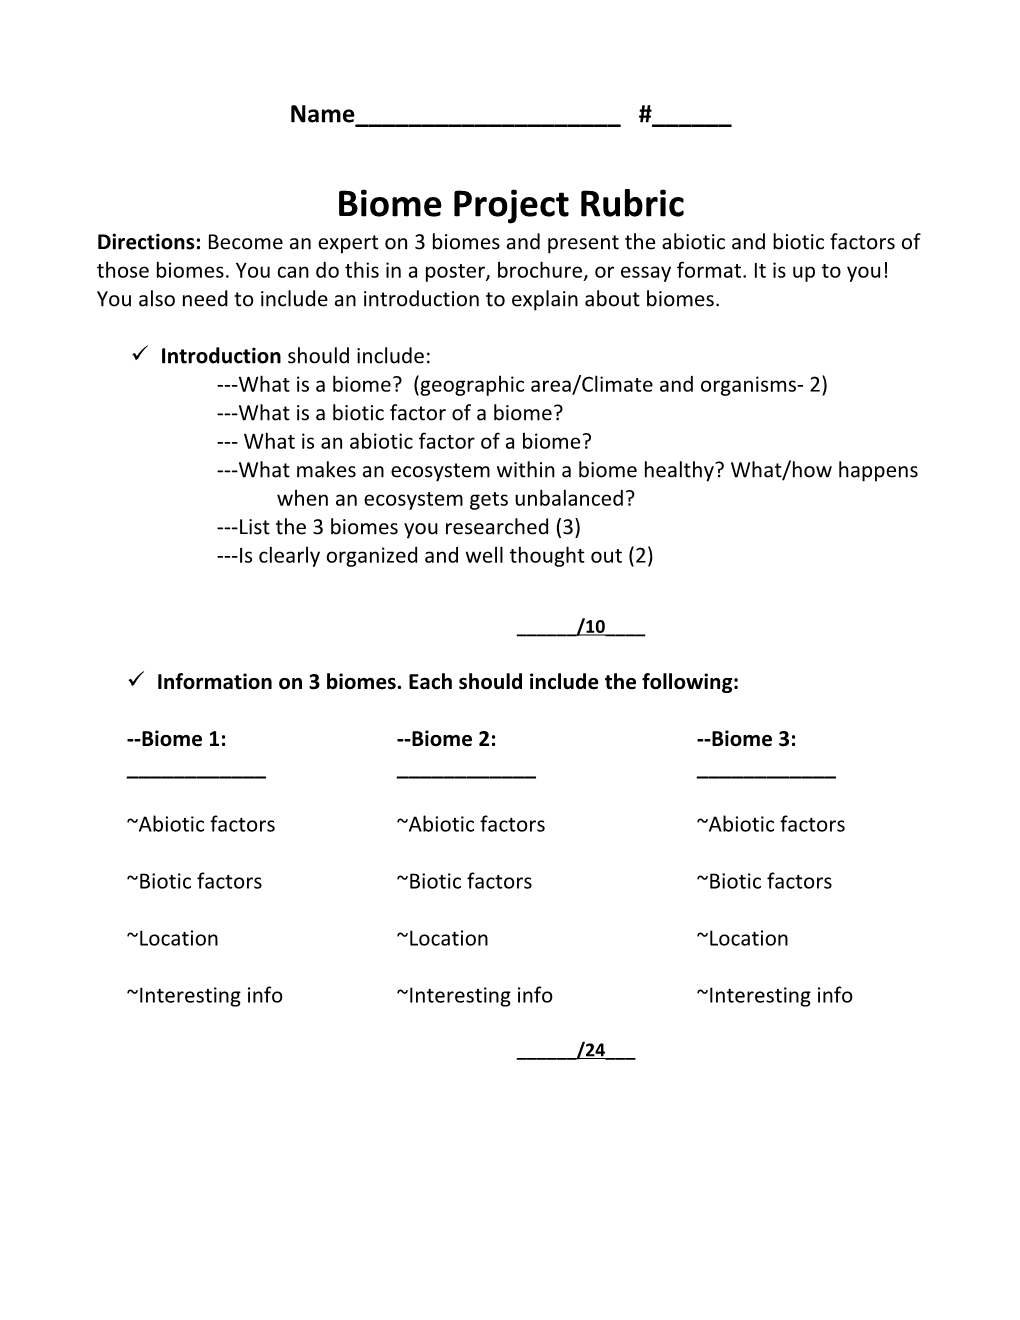 Biome Project Rubric